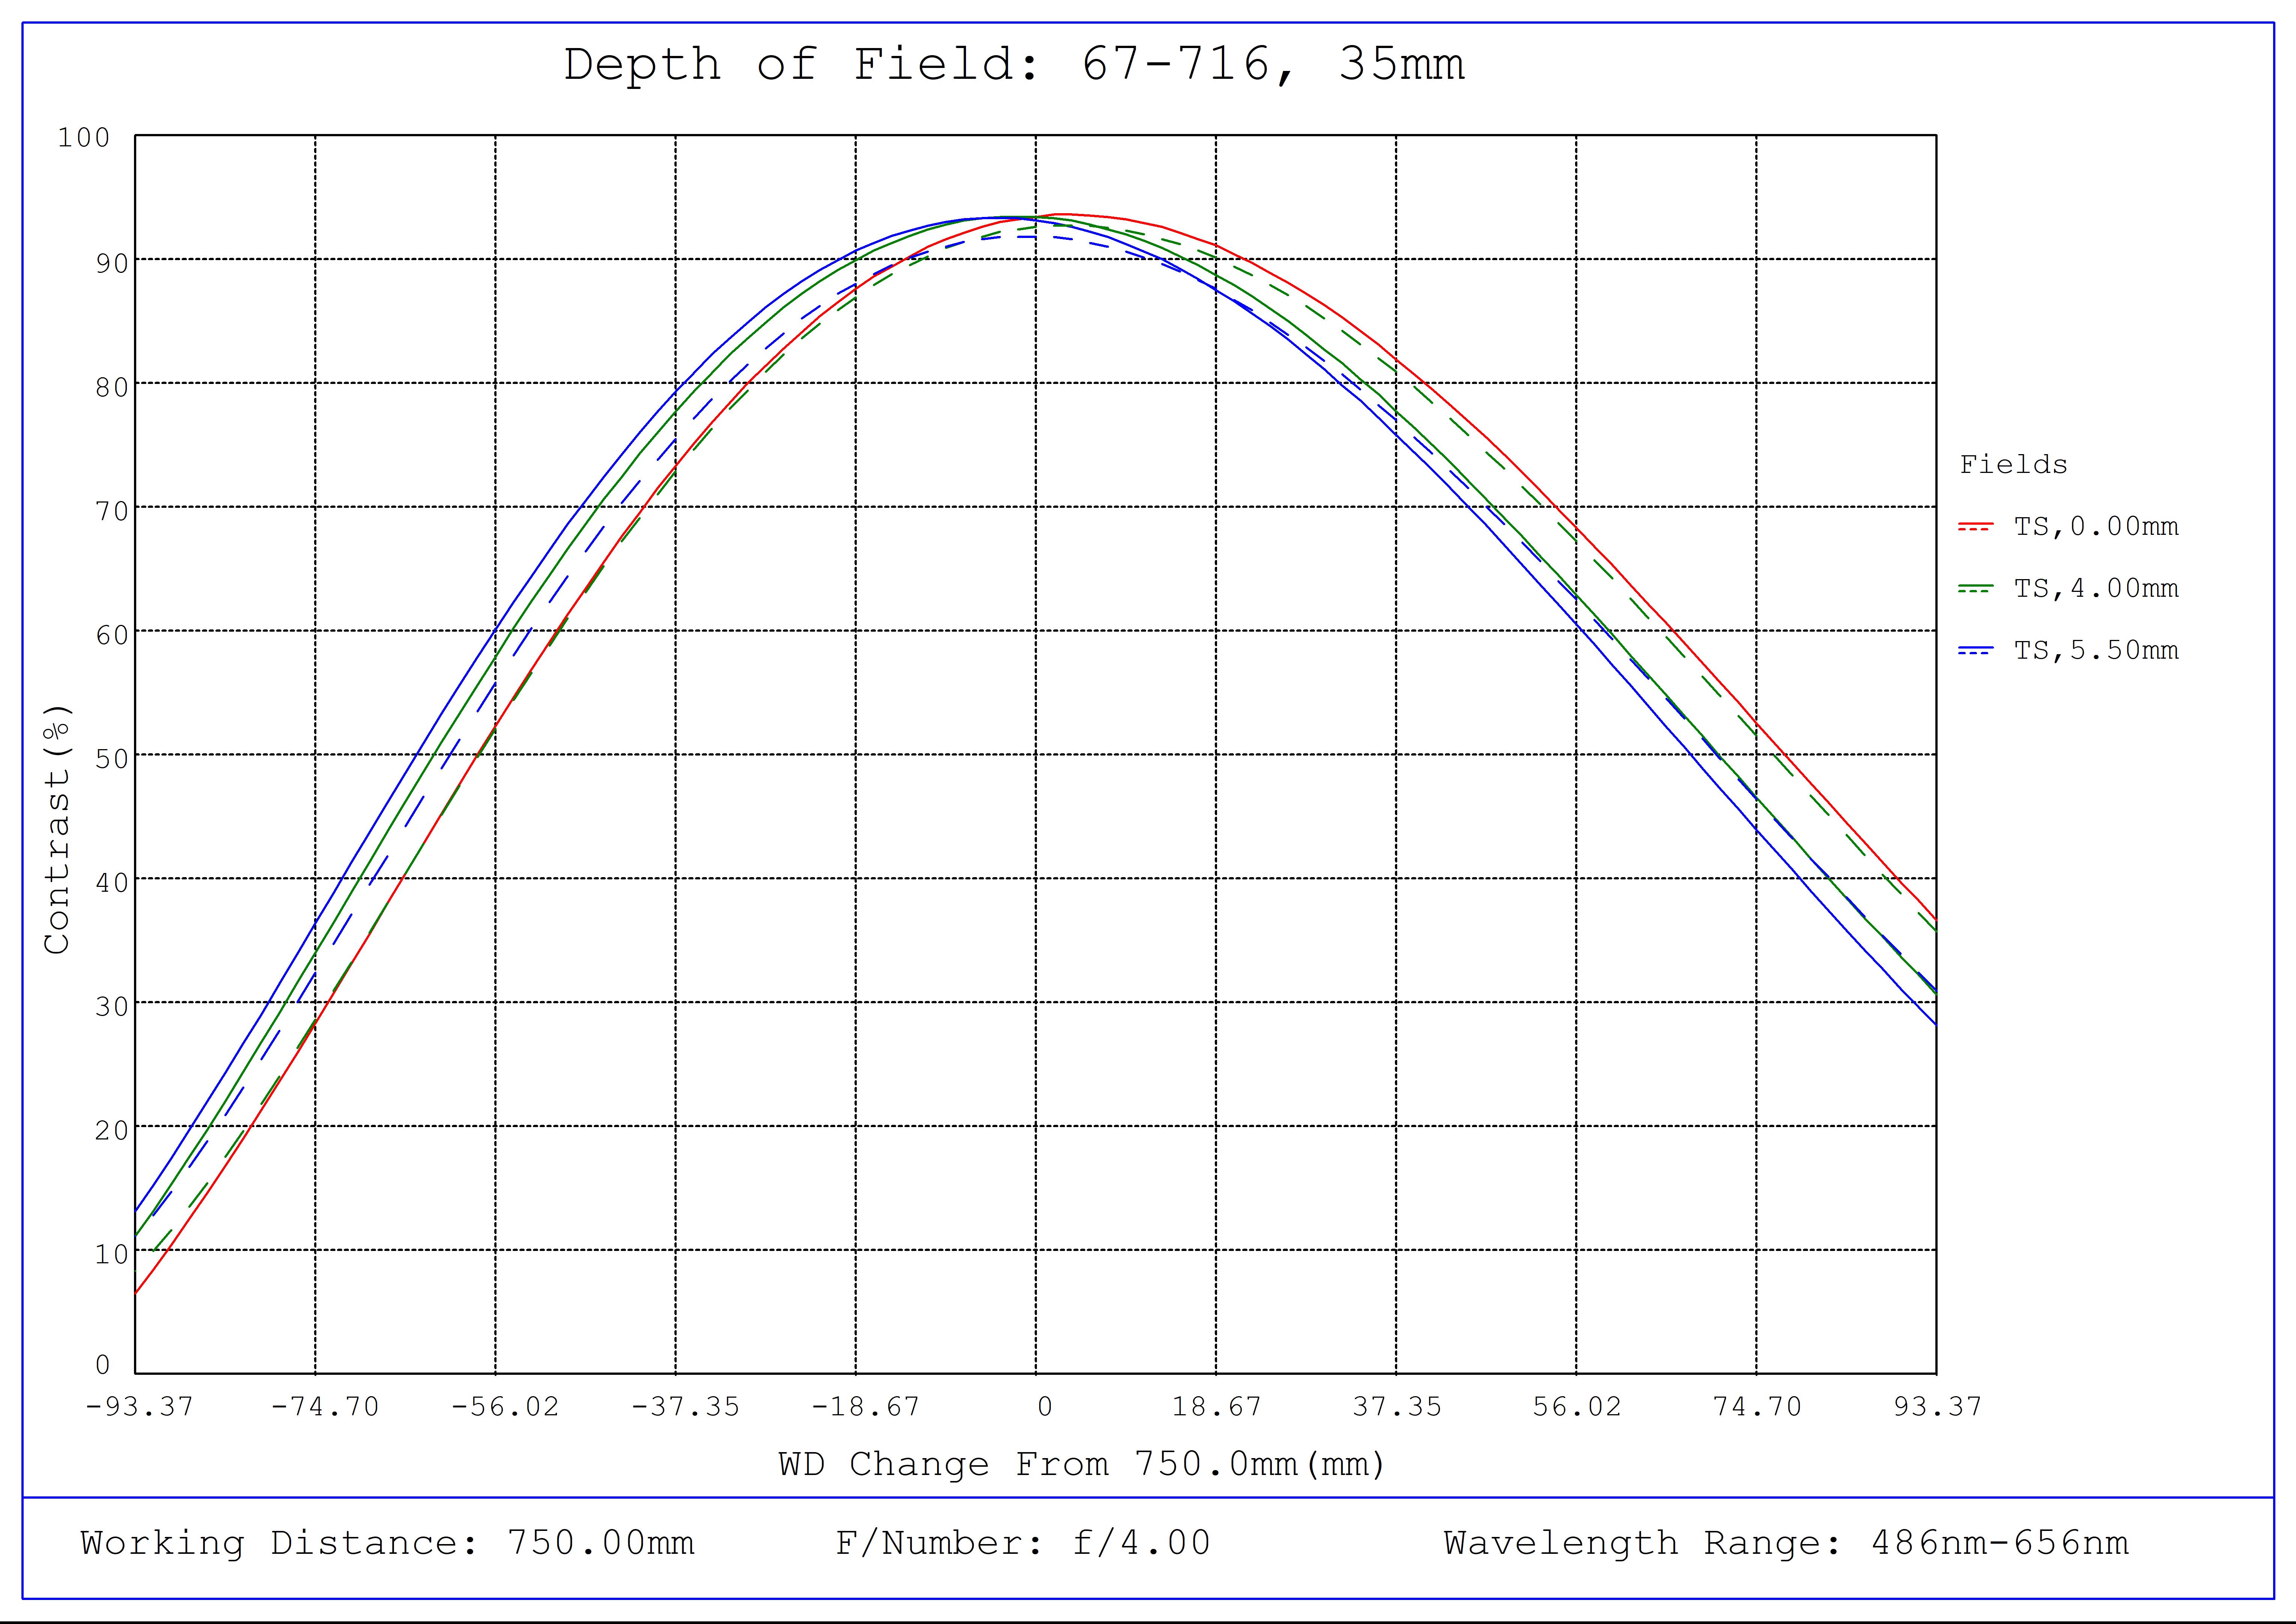 #67-716, 35mm C VIS-NIR Series Fixed Focal Length Lens, Depth of Field Plot, 750mm Working Distance, f4